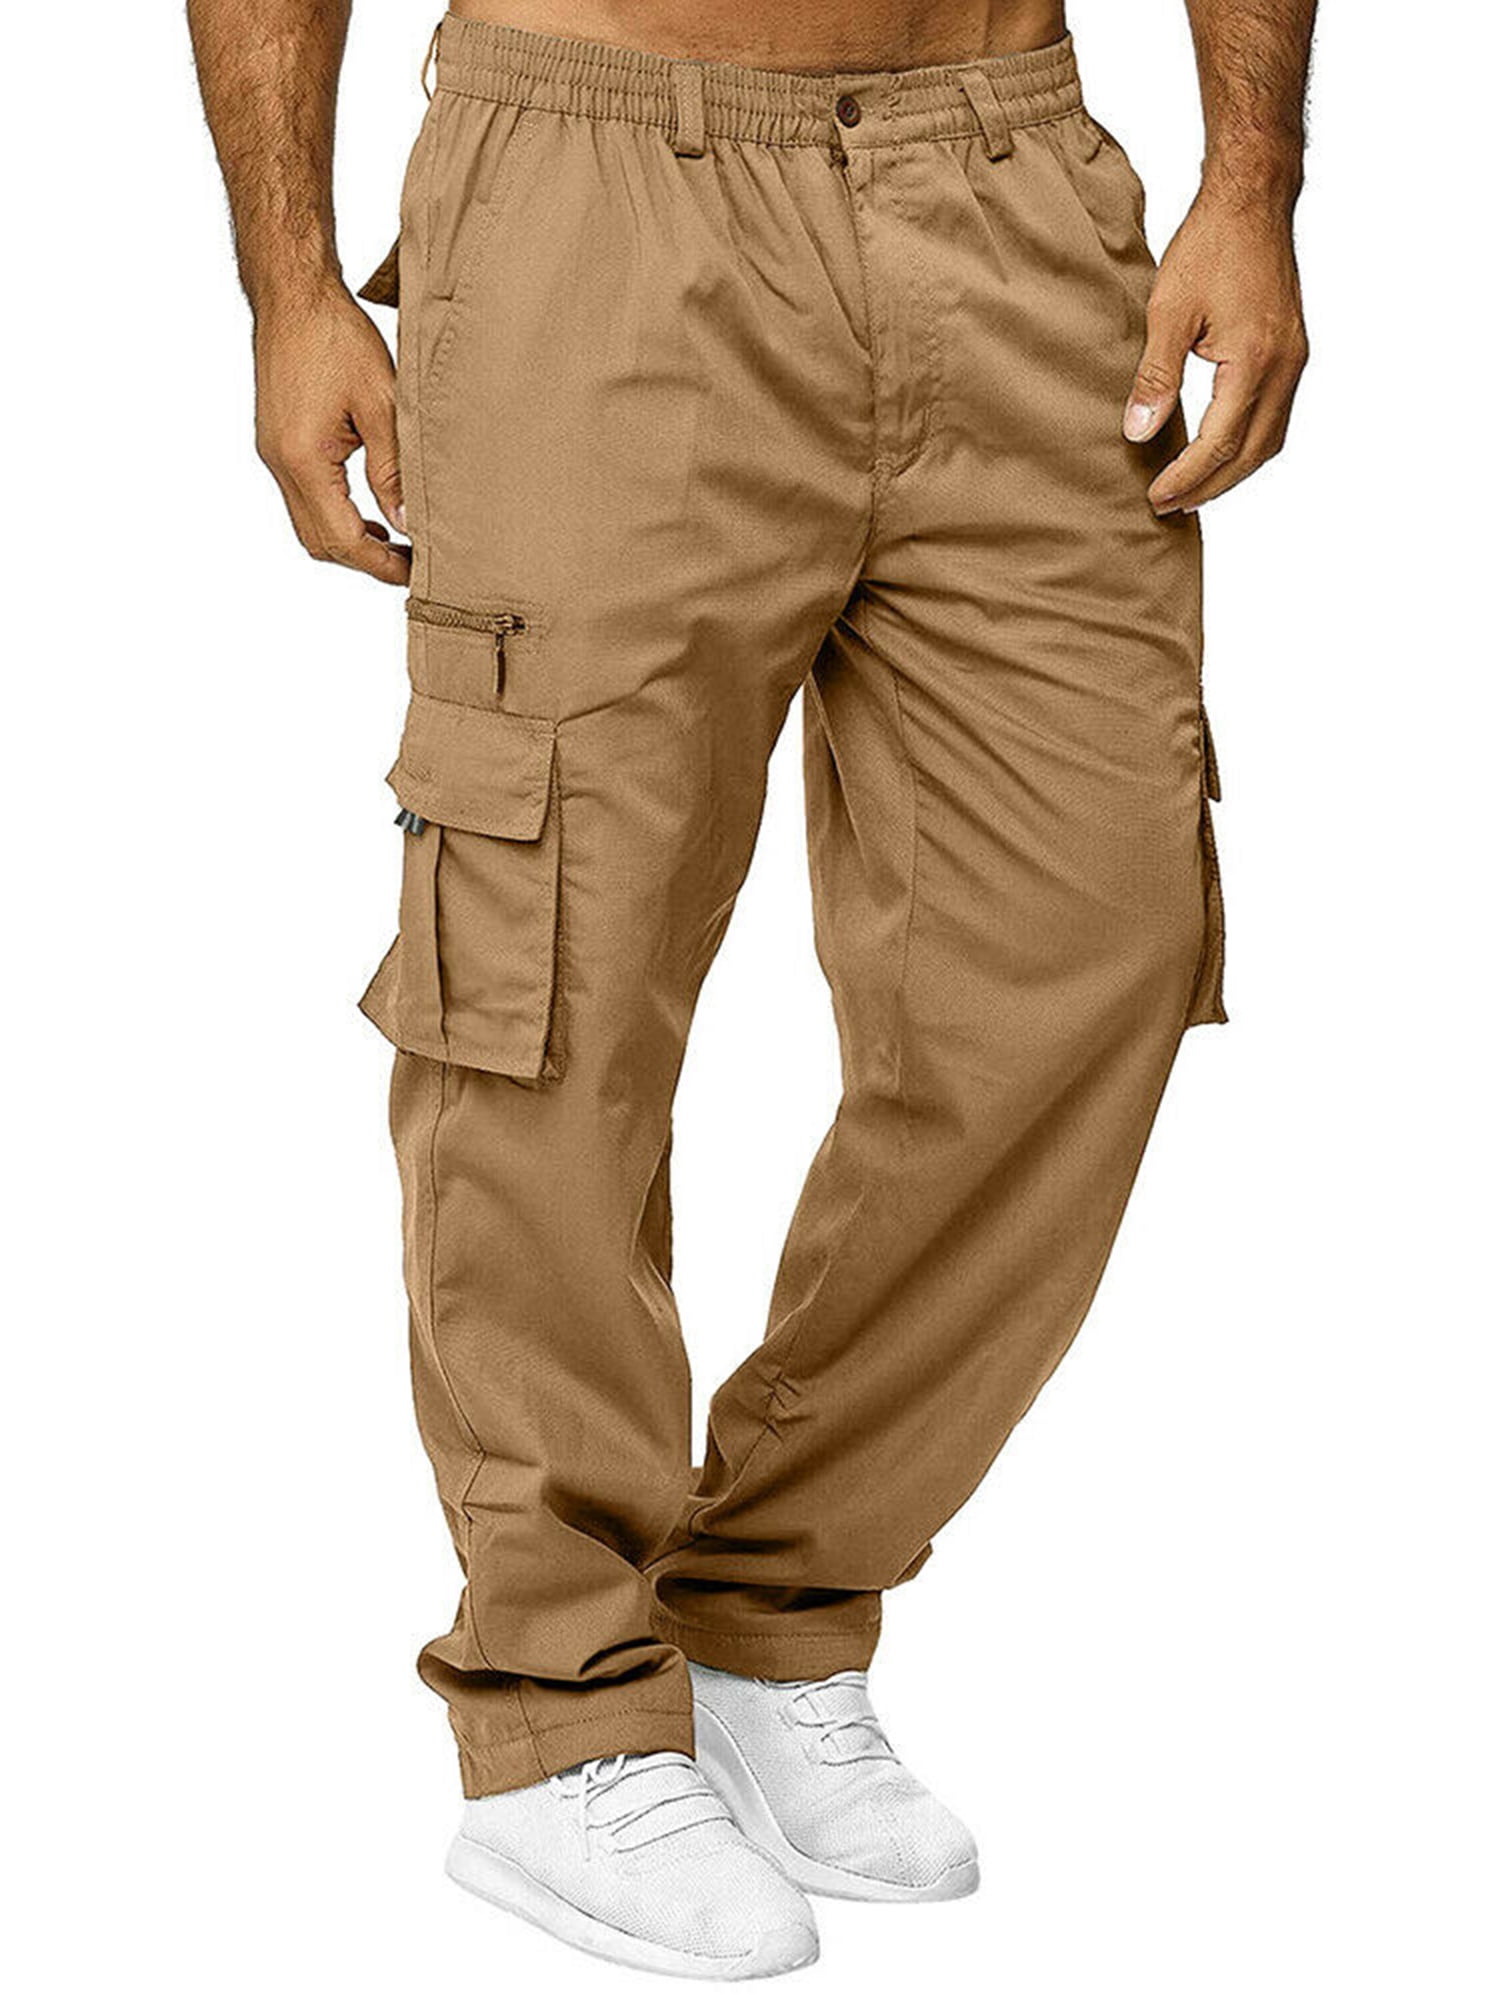 Mens Casual Combat Cargo Pants Pocket Loose Work Trousers Sports Pants M-3XL 